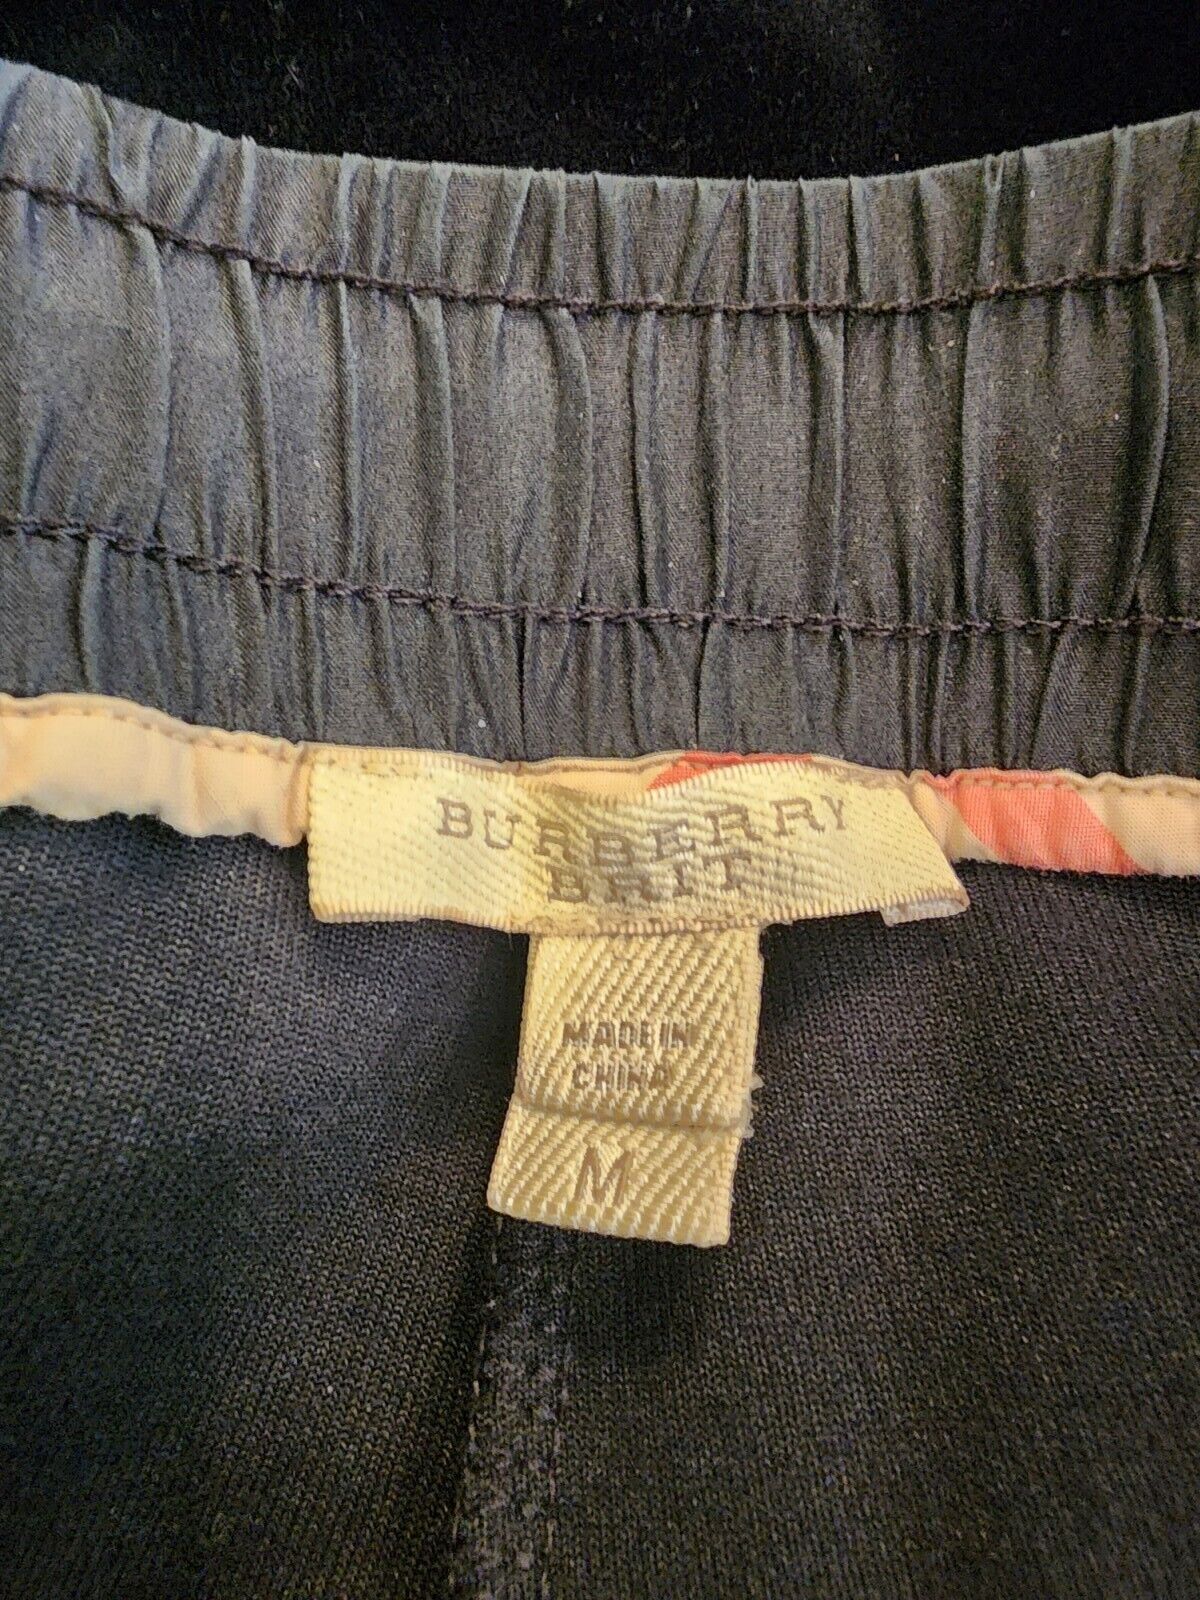 BURBERRY Velour Pants Black Lounge Pants Sz Medium - image 4